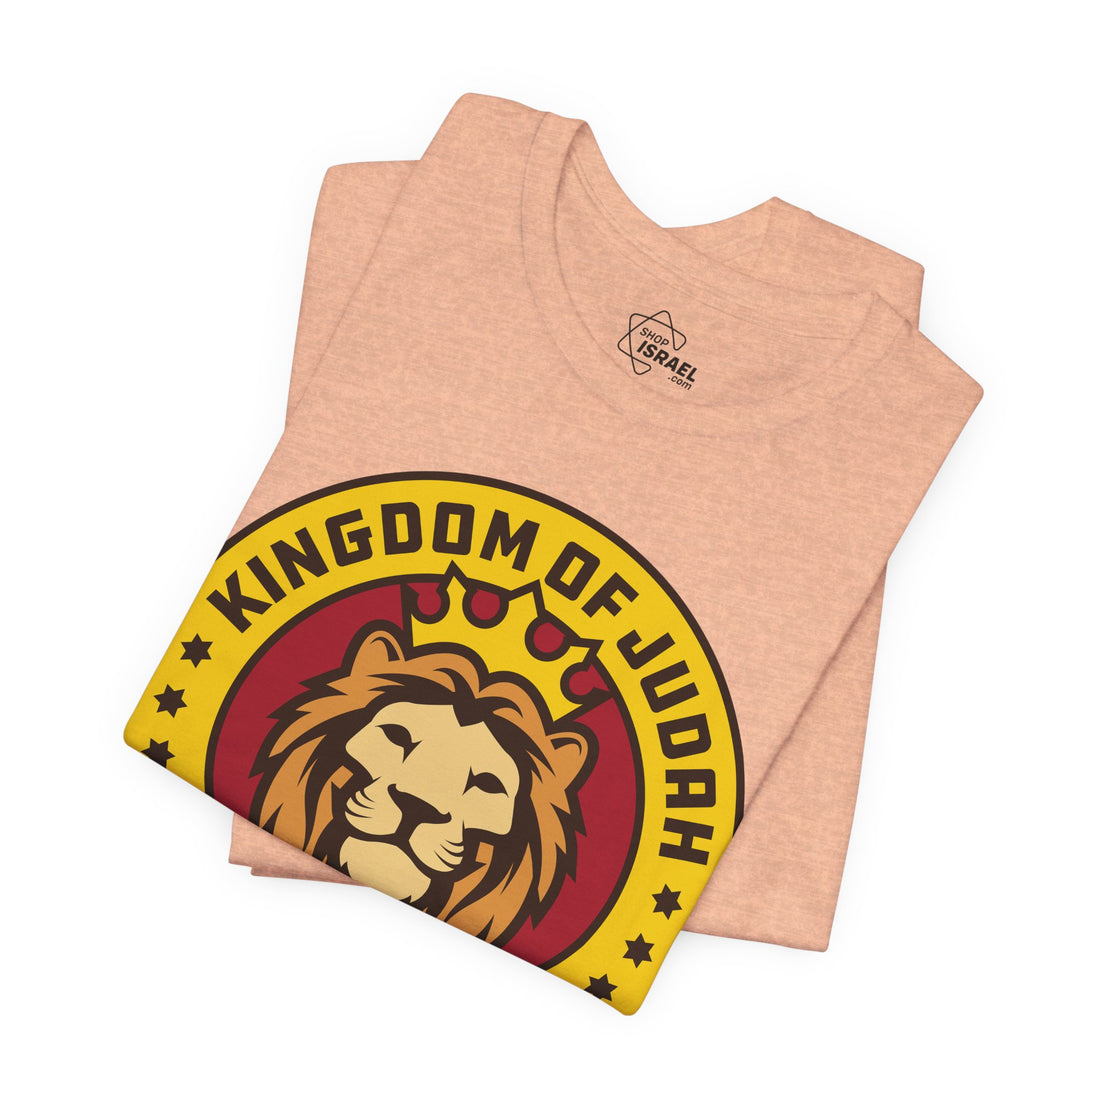 Kingdom of Judah T-shirt - Shop Israel